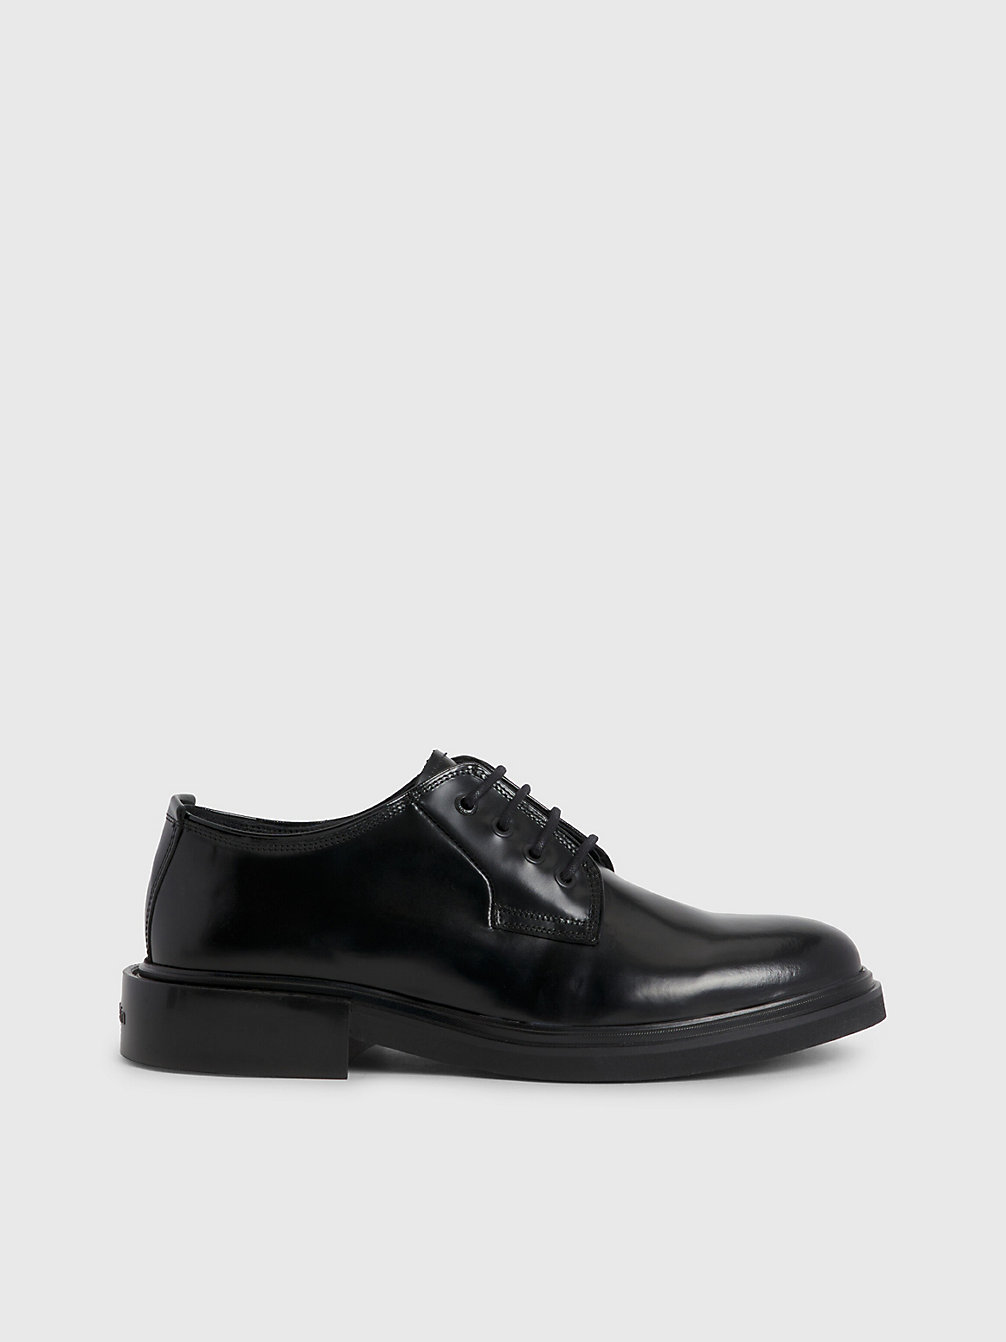 PVH BLACK Leather Lace-Up Shoes undefined men Calvin Klein